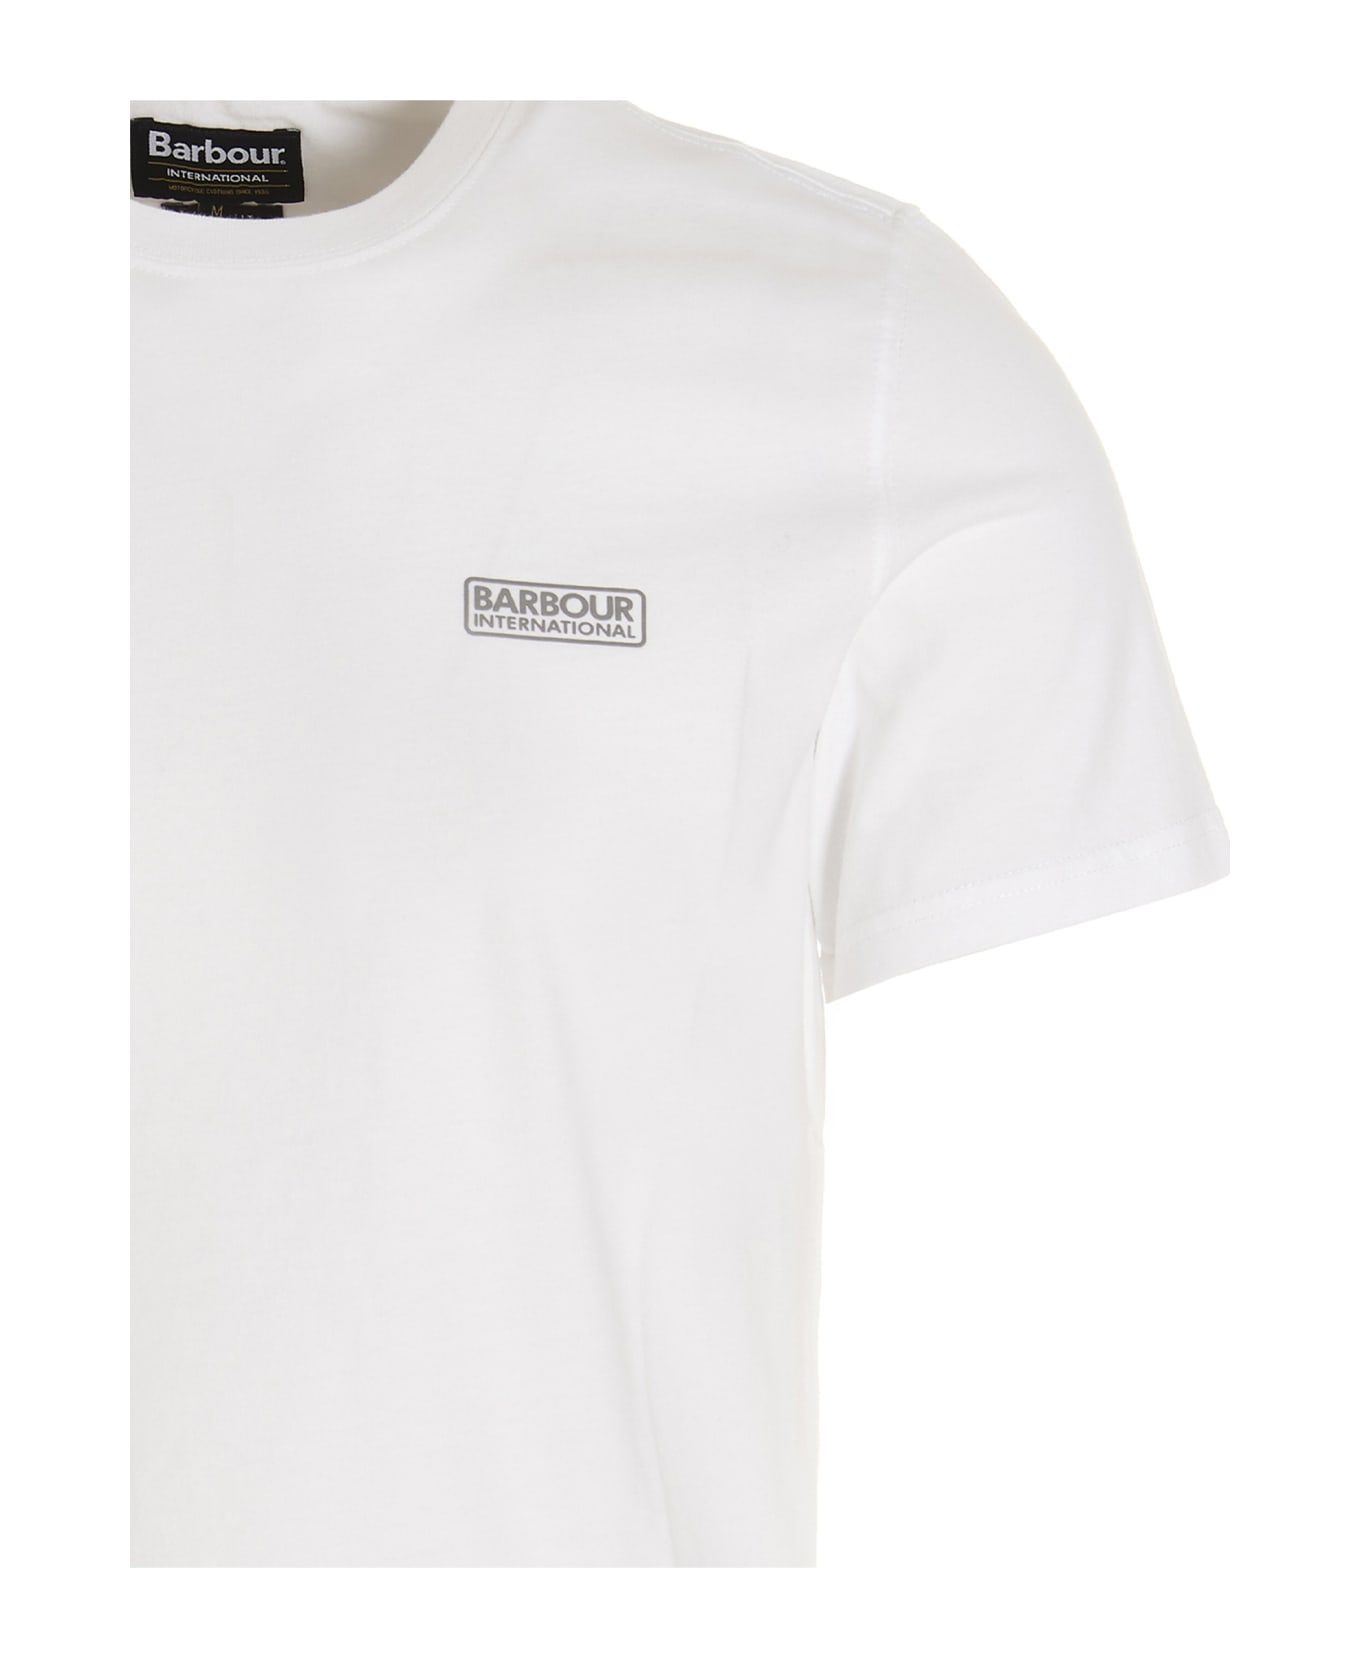 Barbour T-shirt 'small Logo' - White シャツ